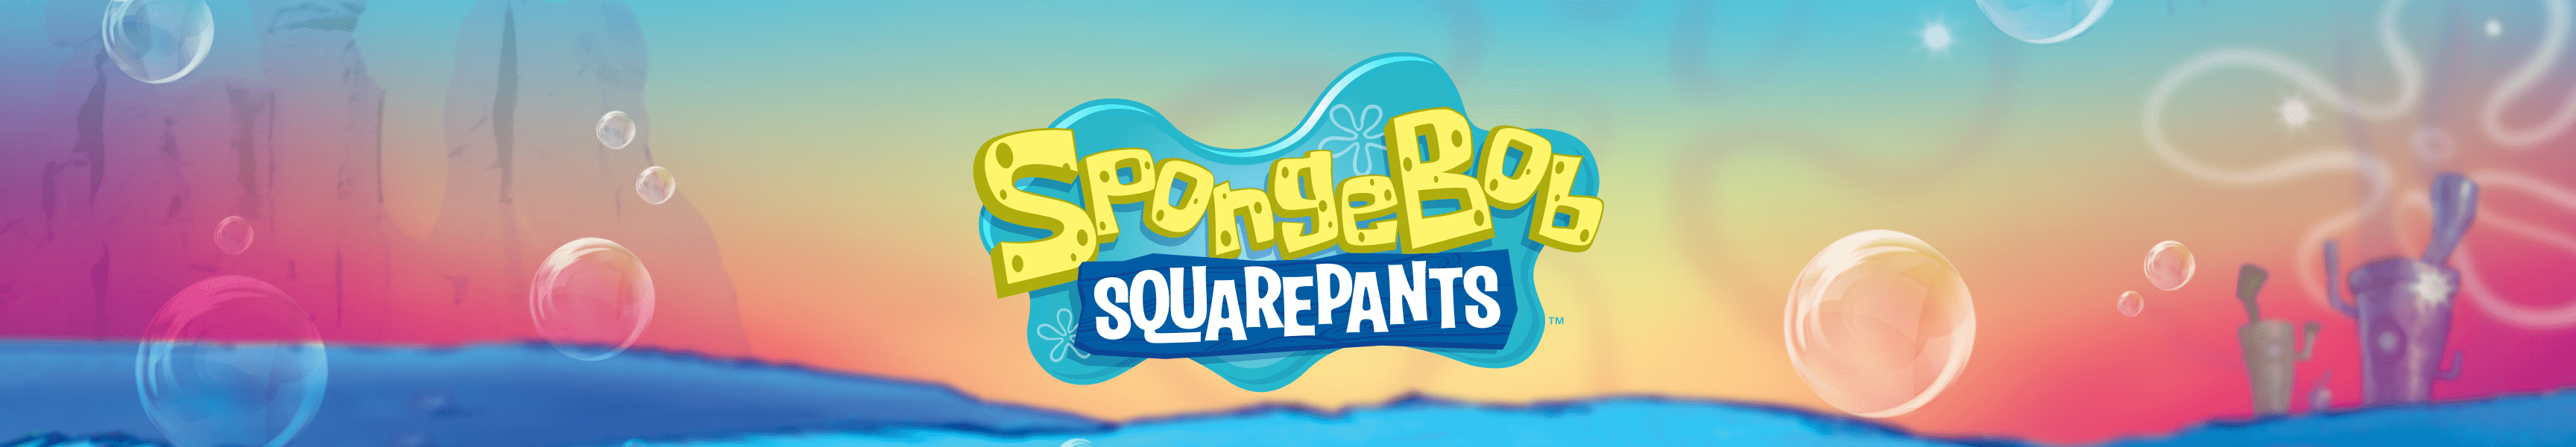 SpongeBob SquarePants Face Shields